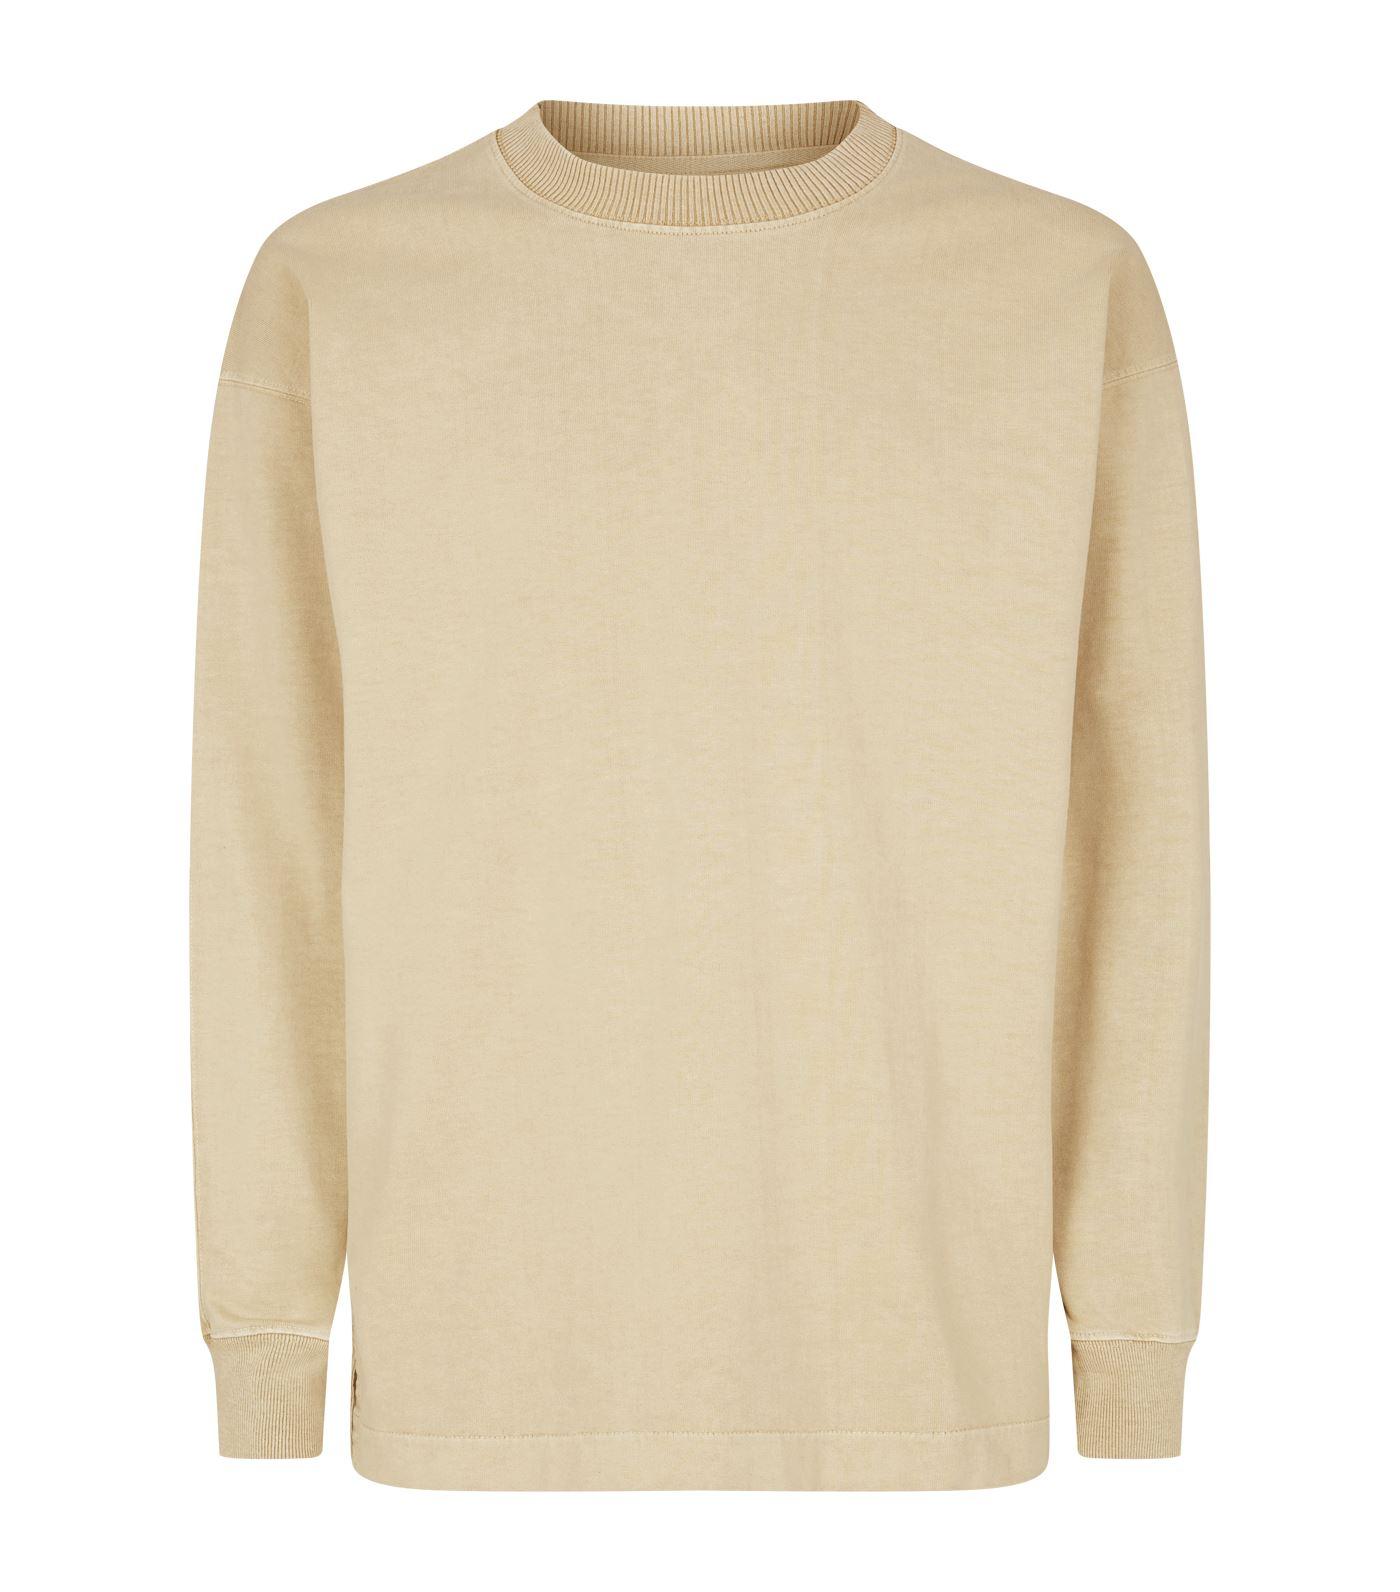 Lemaire Cotton Sweatshirt in Grey (Gray) for Men - Lyst